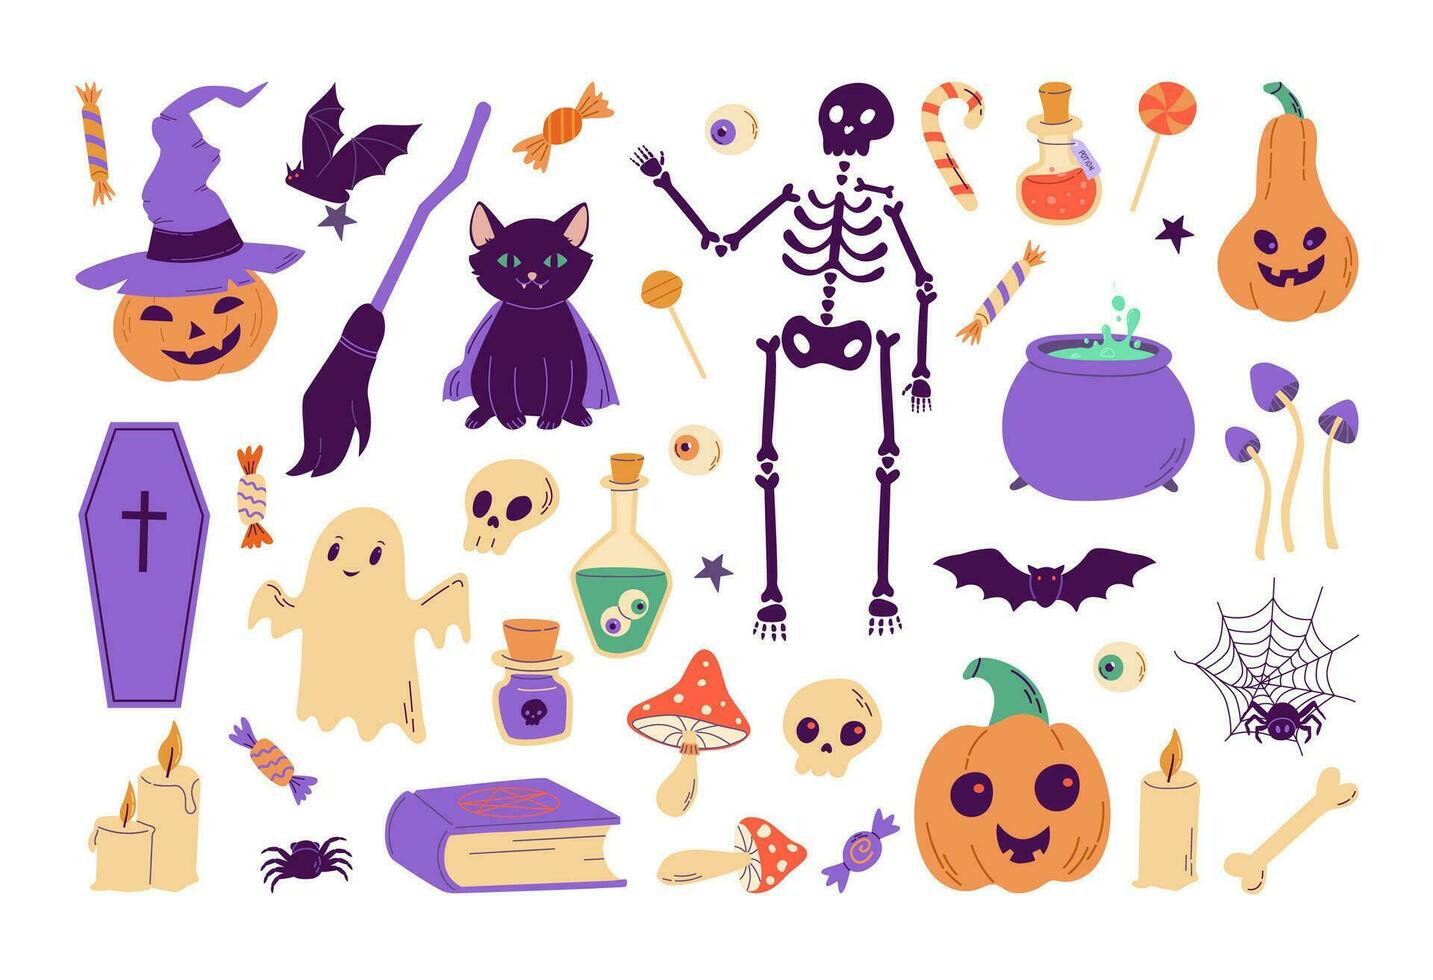 Happy Halloween elements set. Skeleton, ghost, pumpkin, bat, black cat, candies, spiders cartoon vector illustration. Perfect for scrapbooking, invitation, greeting card, poster design